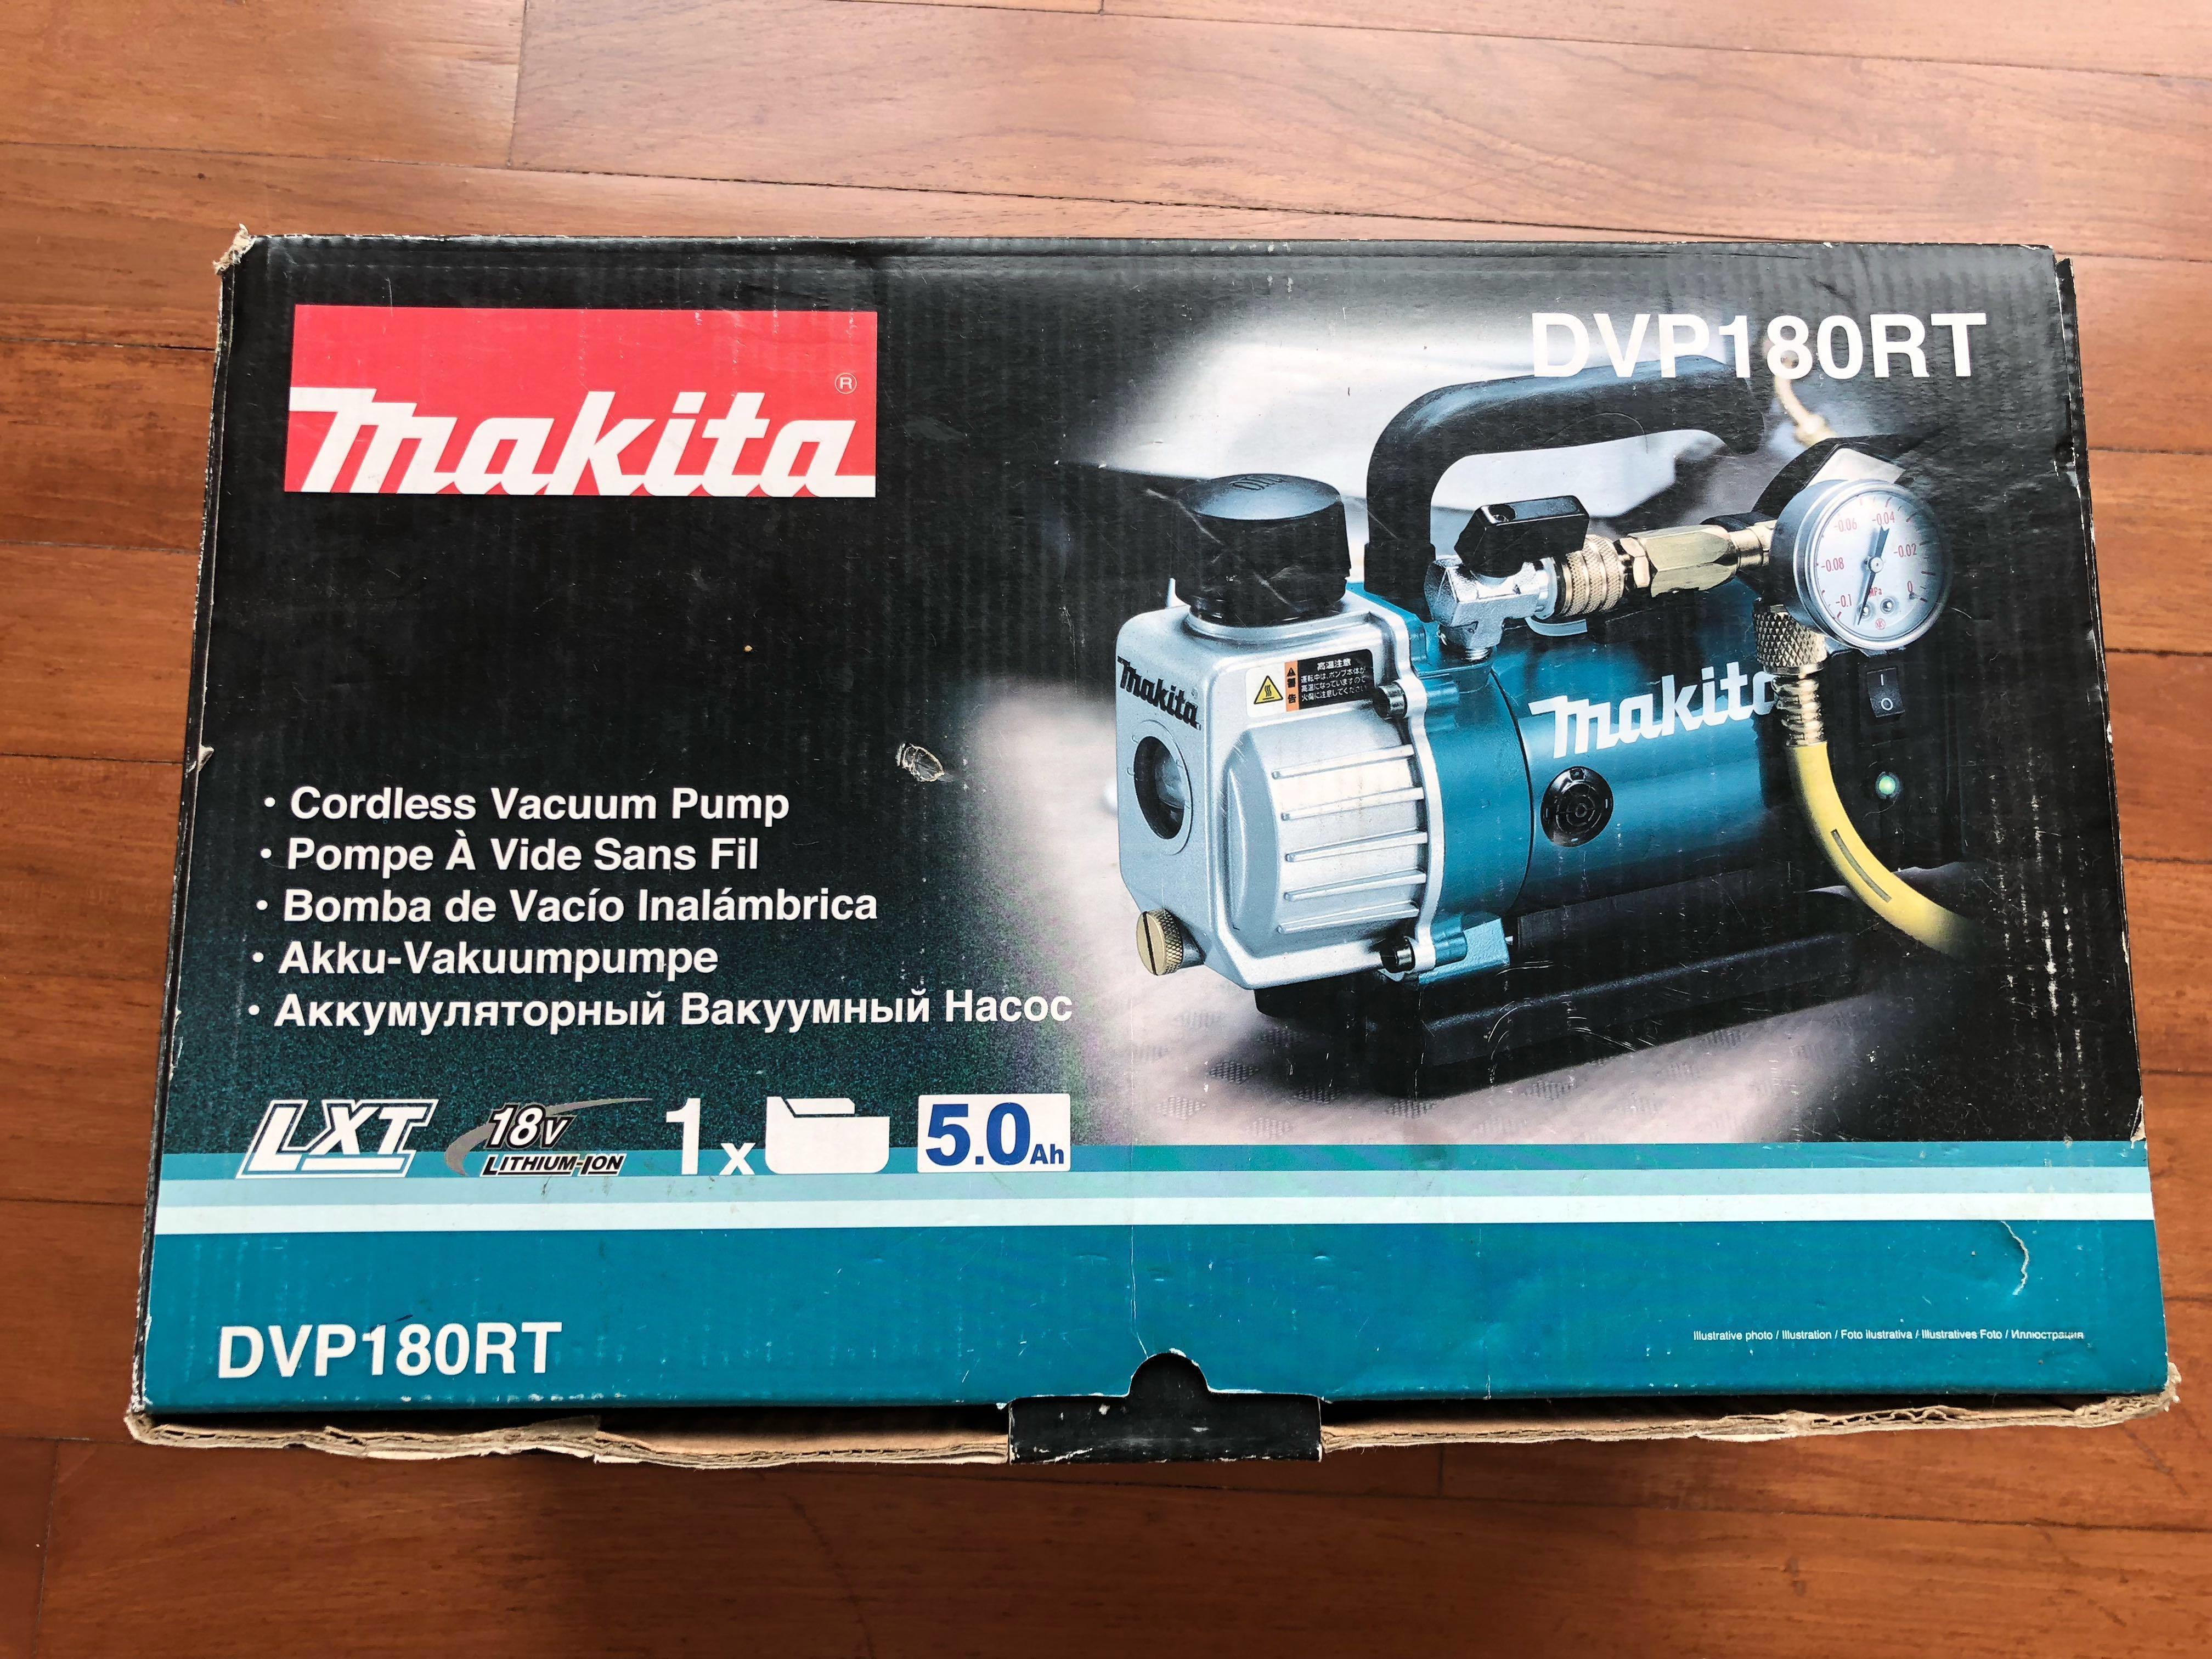 Makita Vacuum Pump - Wireless DVP180RT, Furniture & Home Living